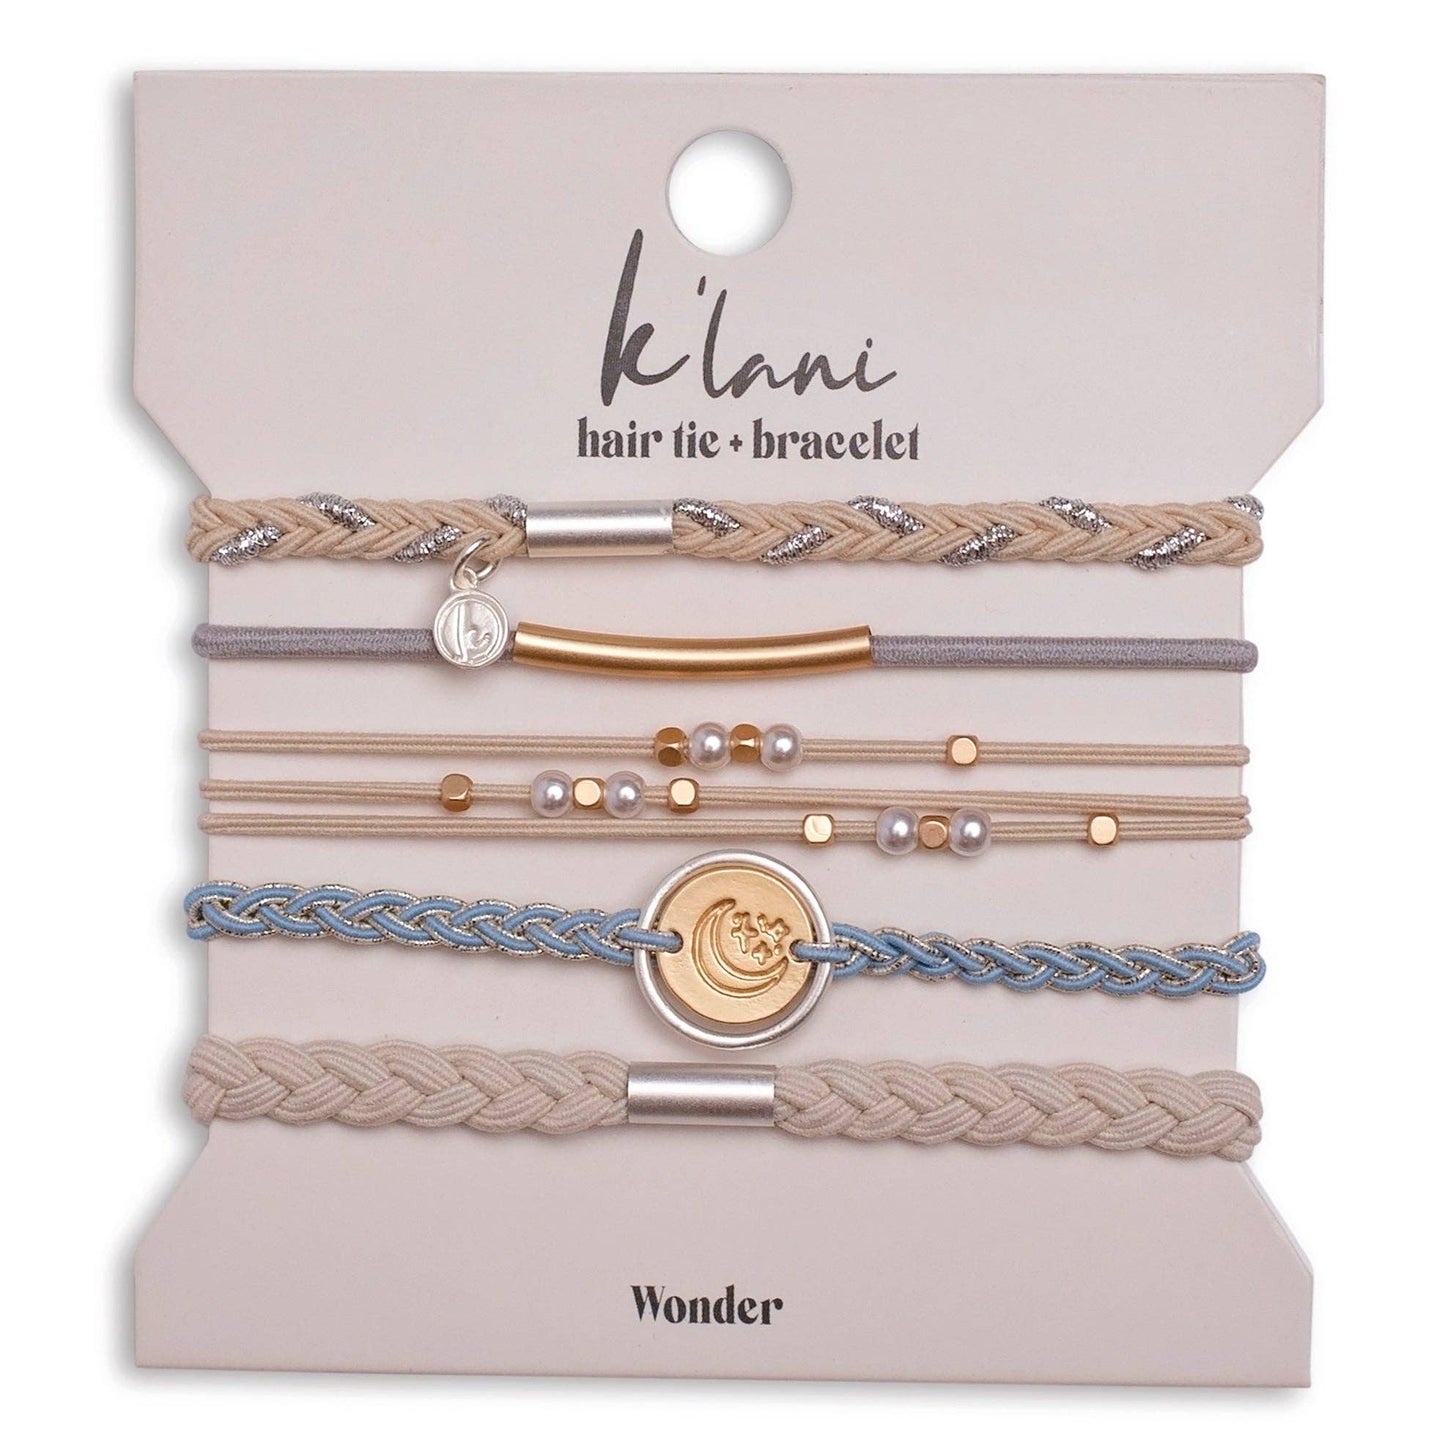 K'Lani Hairtie Bracelets - Wonder - Medium